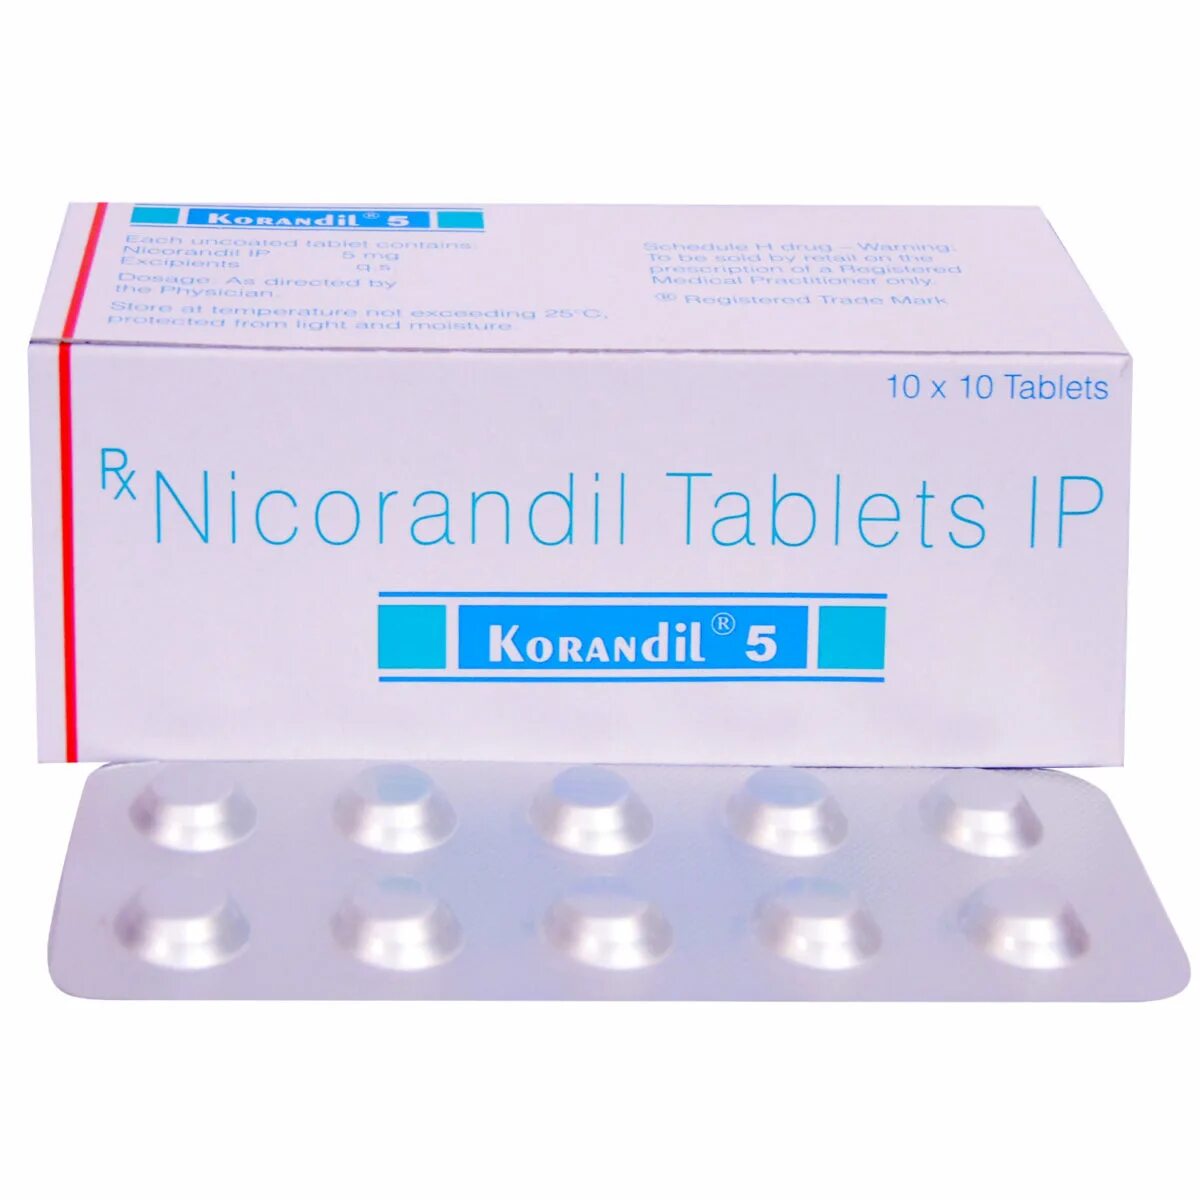 Никорандил 10 аналоги. Корандил. Nicorandil Tablets. Корандил 5 мг. Никорандил лекарственная форма.